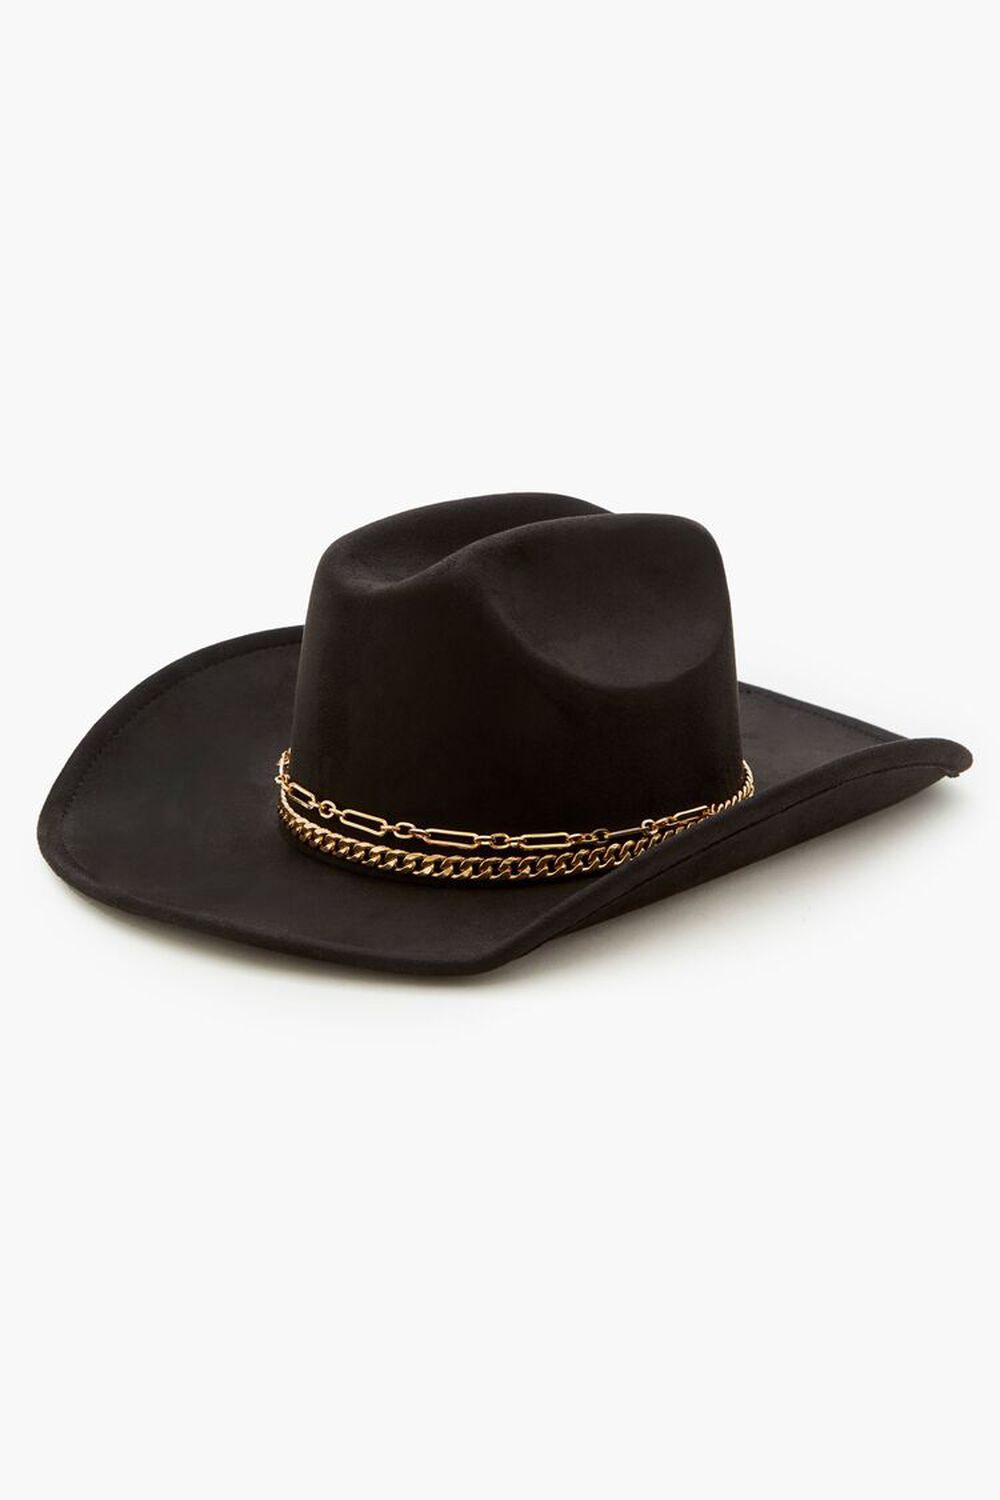 BLACK/GOLD Chain-Trim Brushed Cowboy Hat, image 2